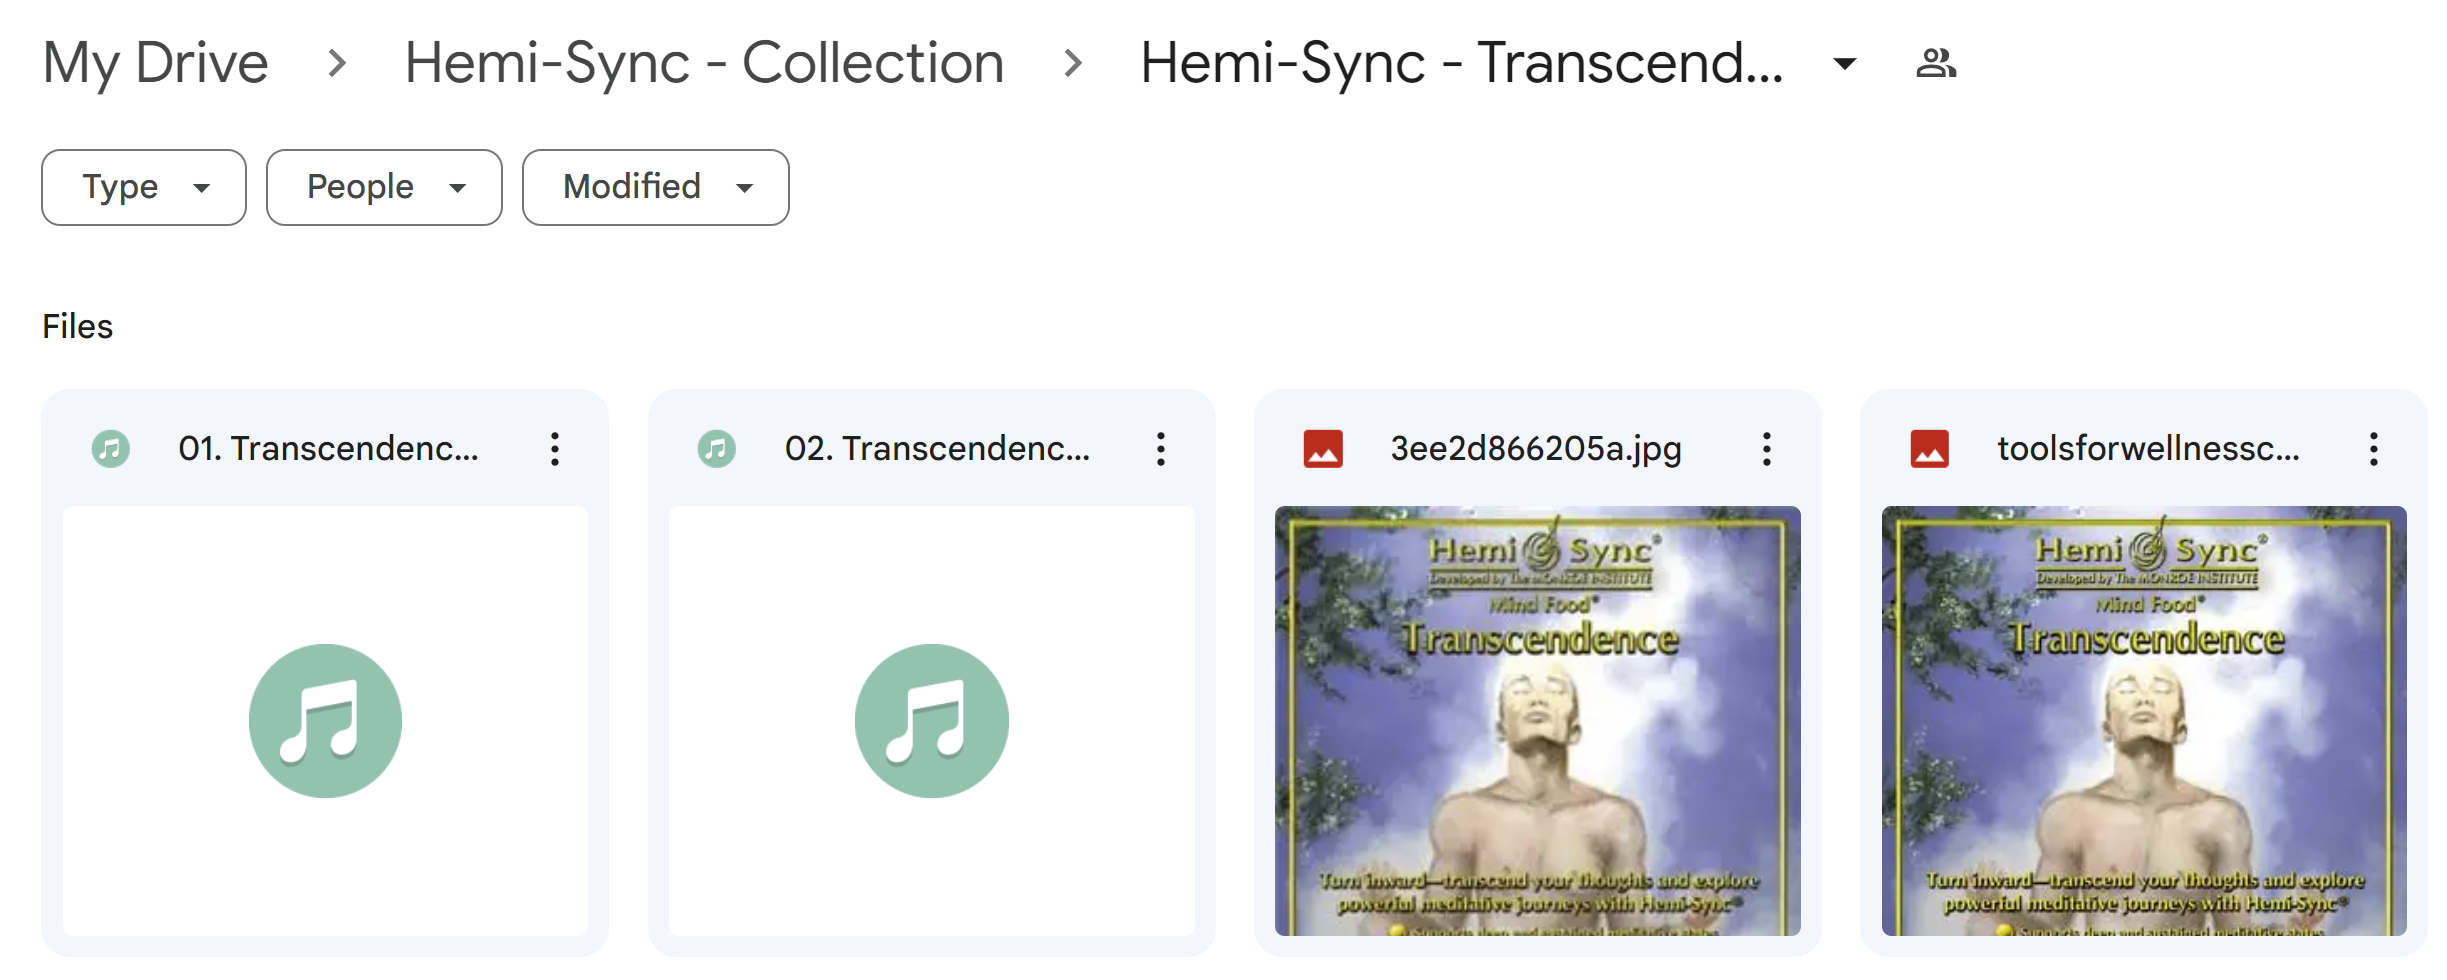 Hemi-Sync – Transcendence